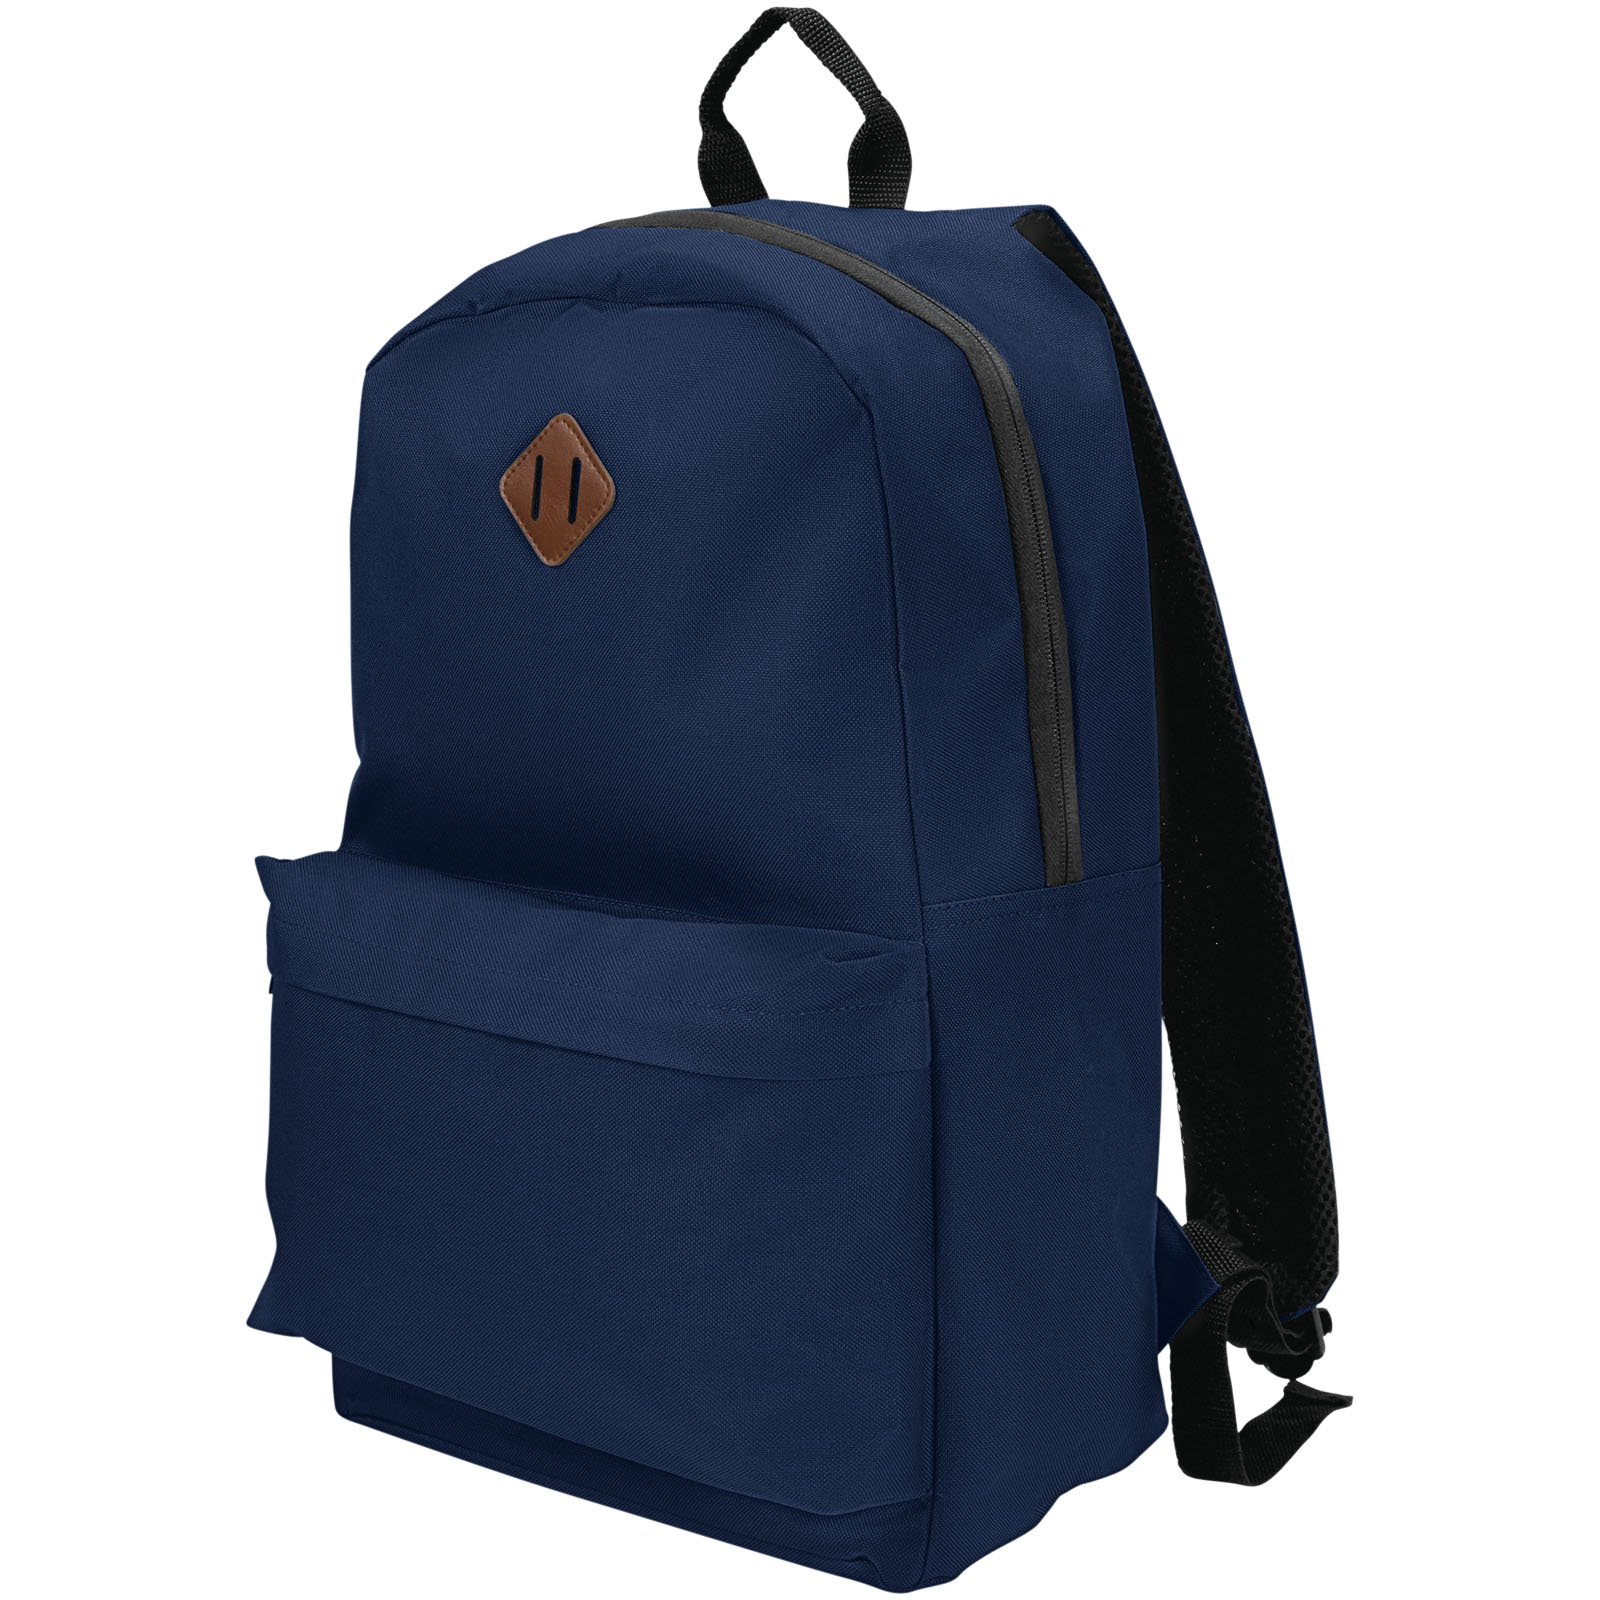 Stratta 15 laptop backpack